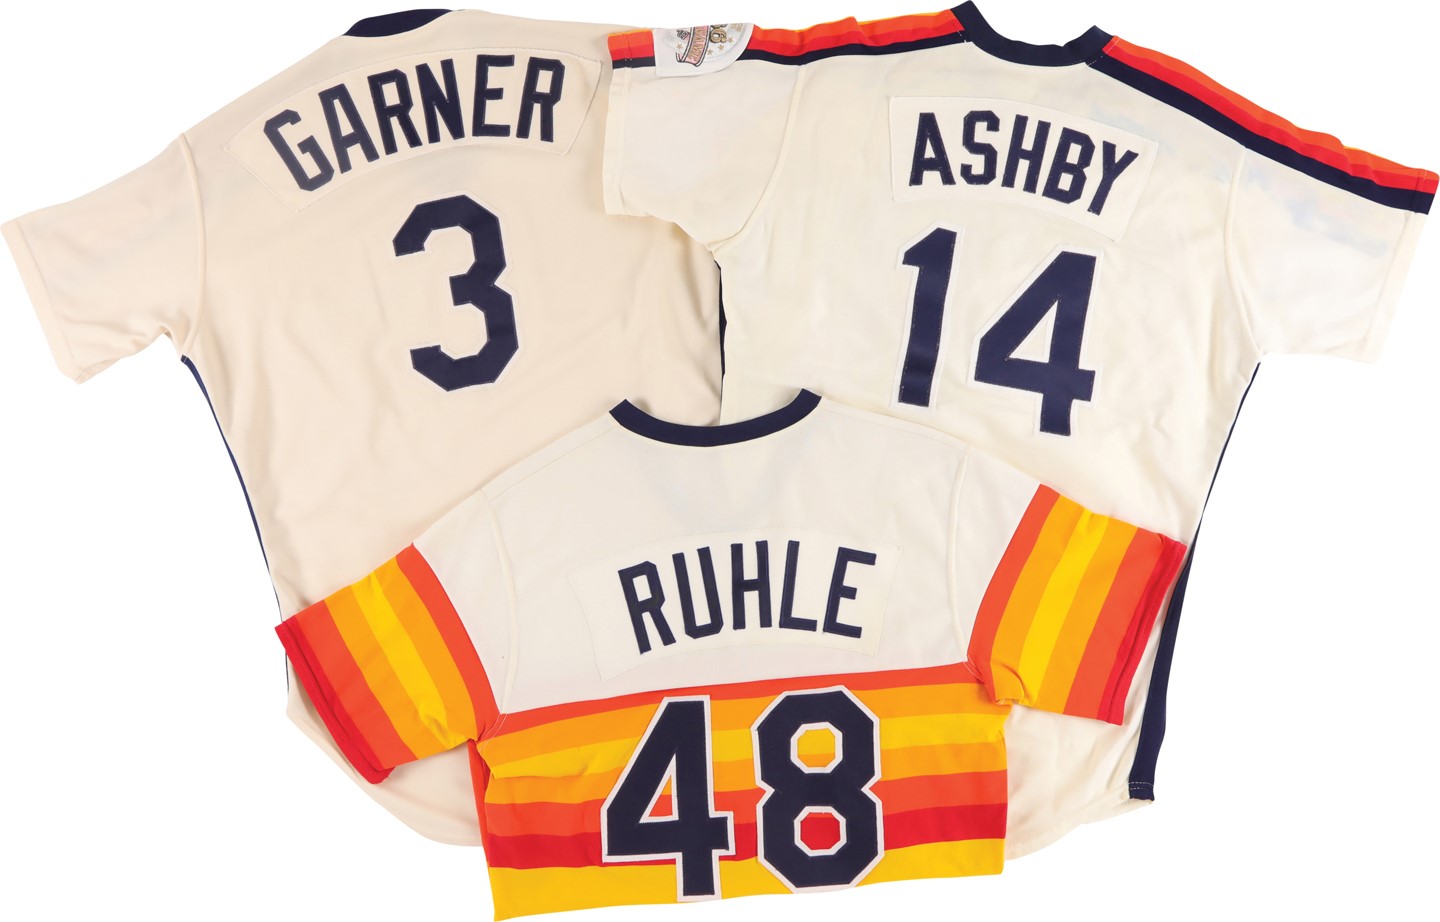 Baseball Equipment - Trio of 1980s Houston Astros Game Worn Jerseys (Ashby, Ruhle, & Garner)